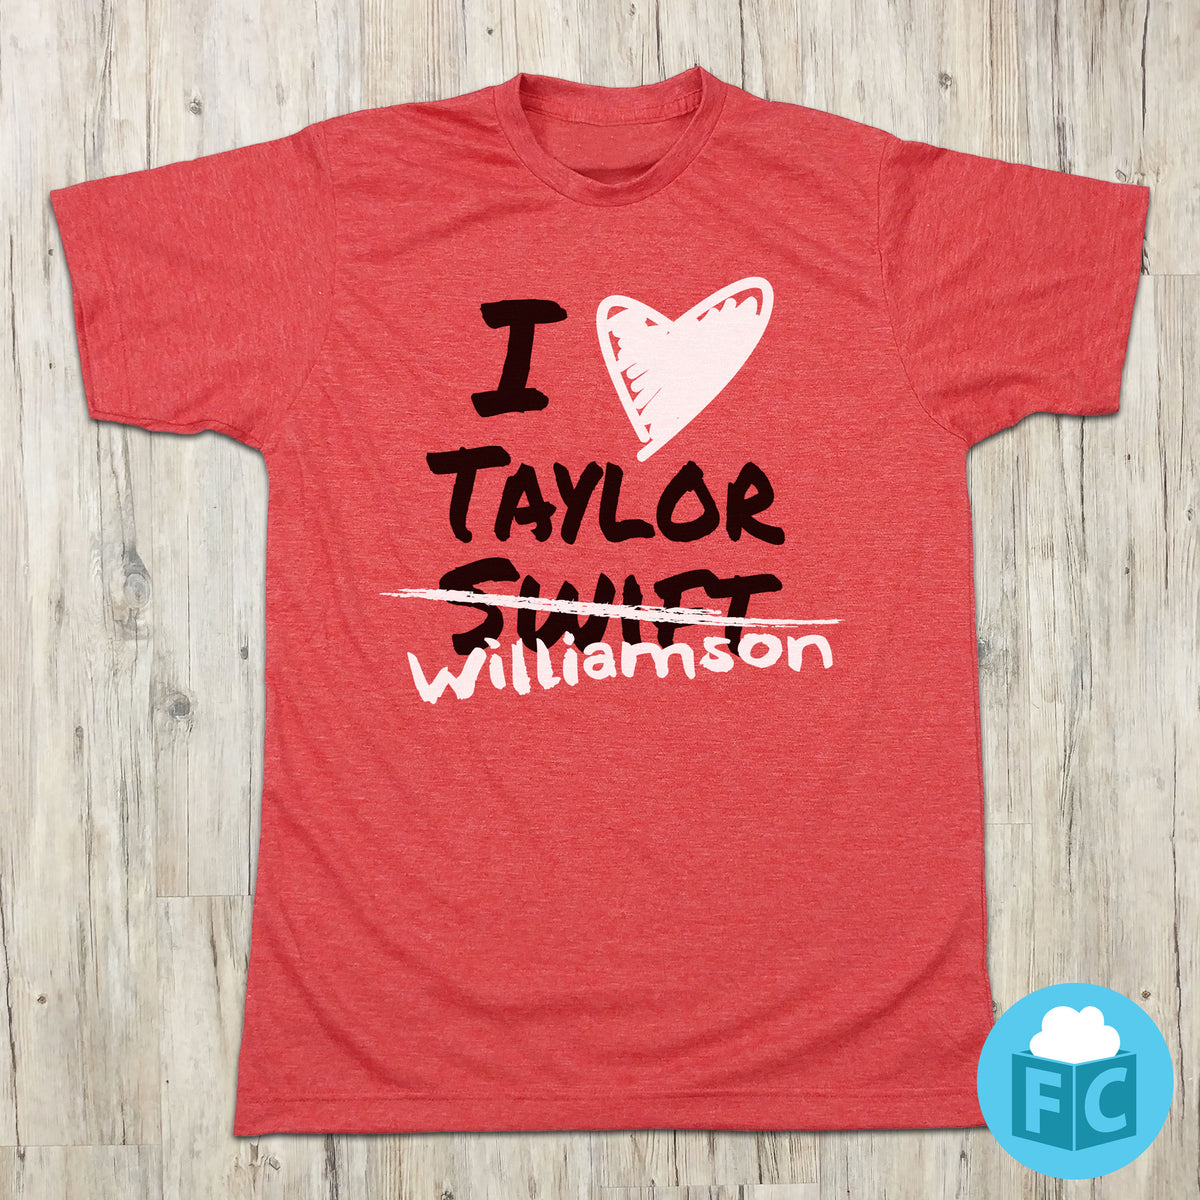 Taylor Williamson